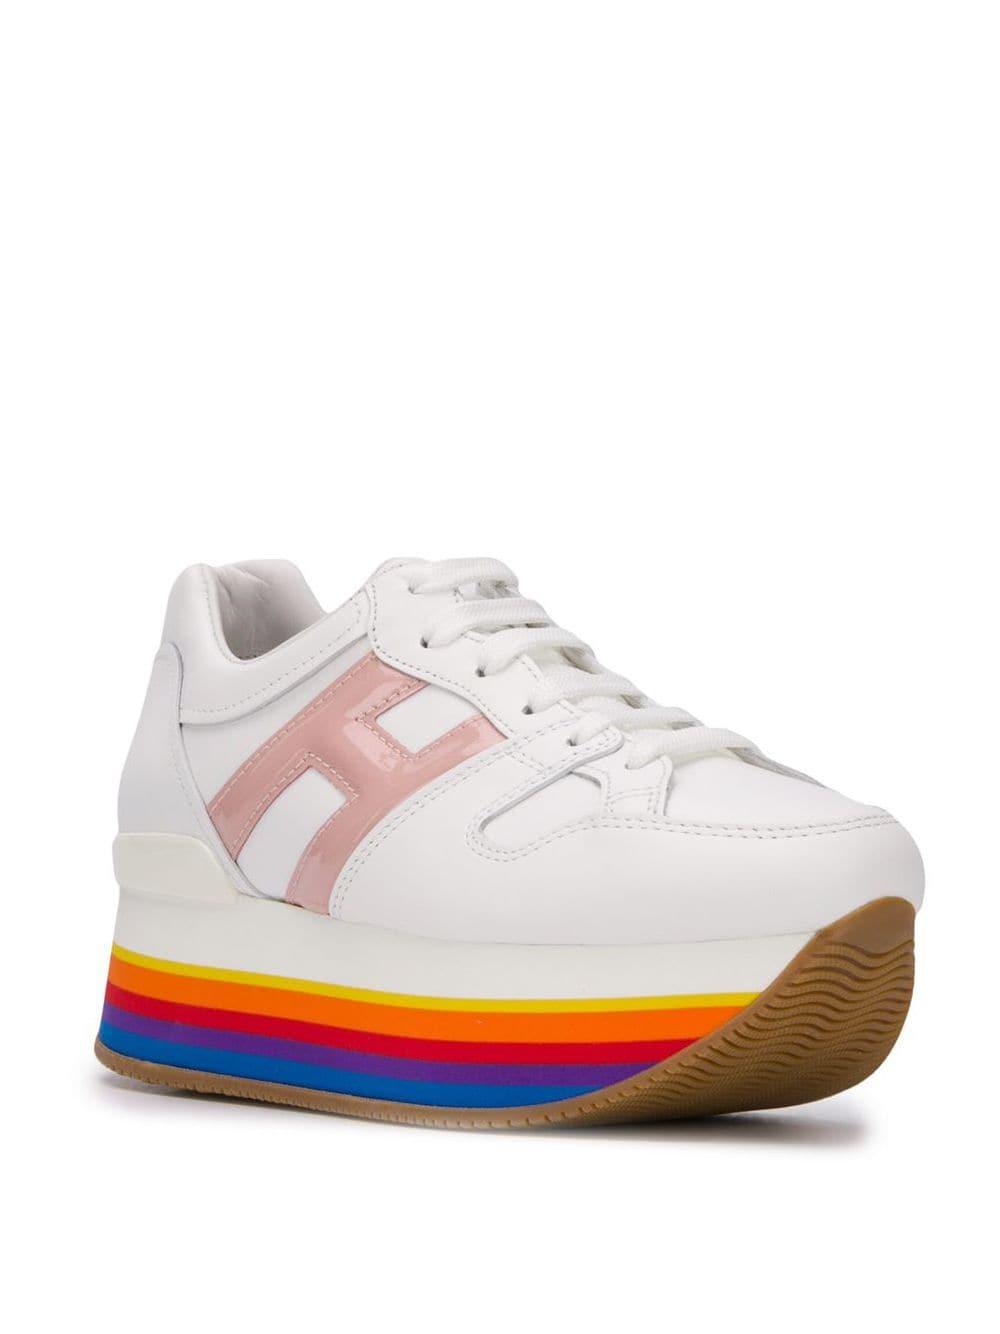 Hogan Leather Rainbow Platform Sneakers in White - Lyst